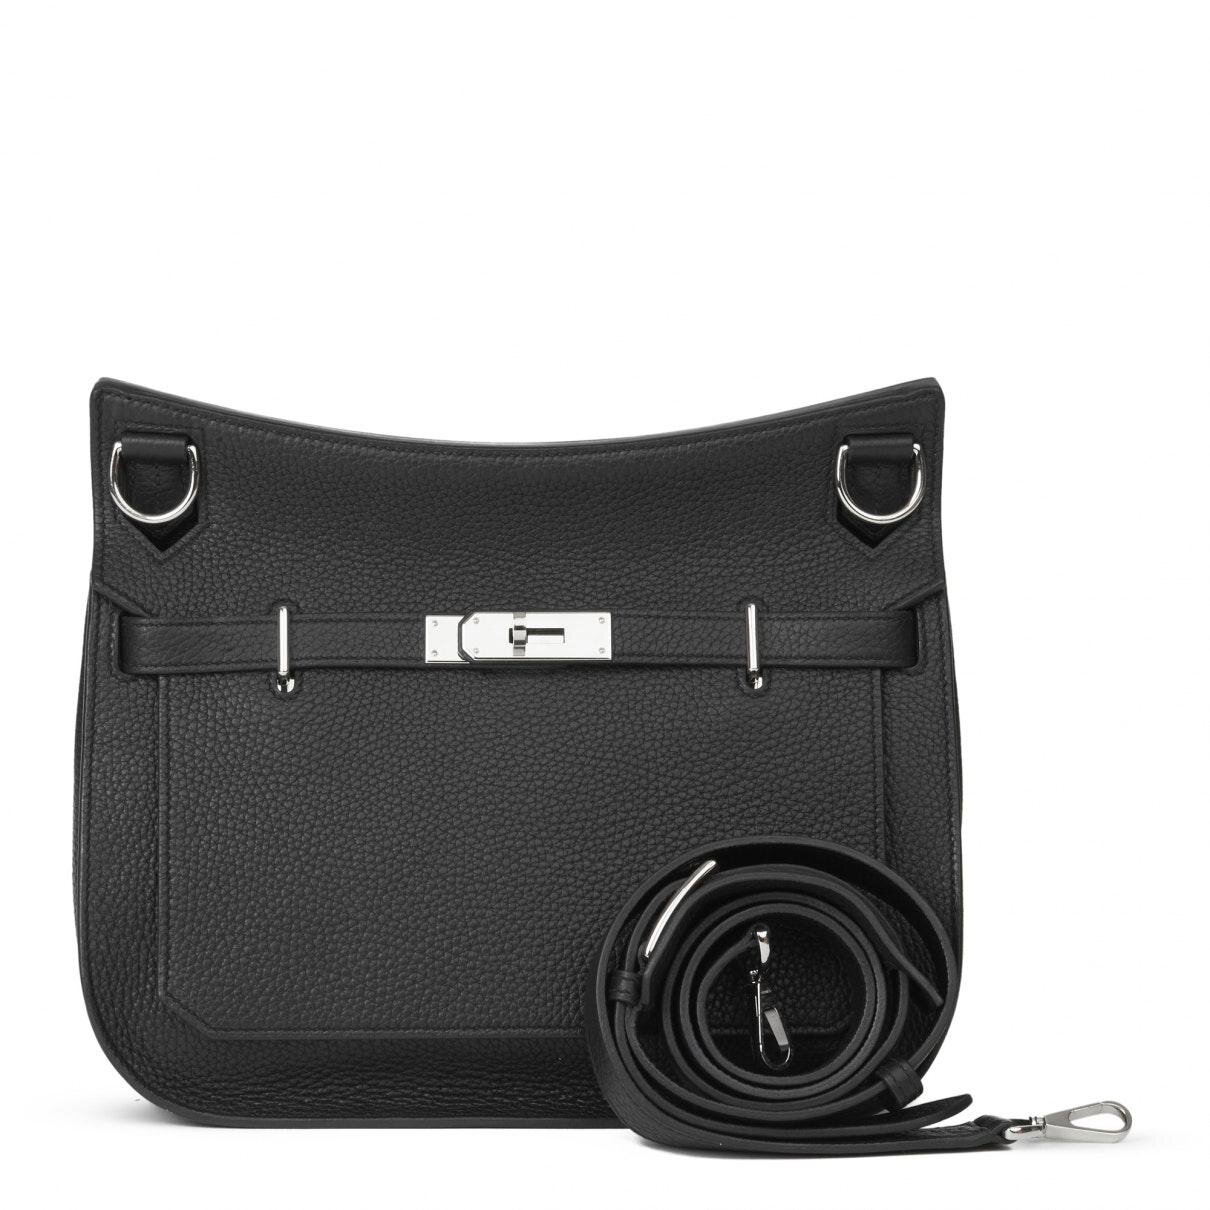 Hermès Jypsiere Shoulder Bag in Black Leather with Silver Hardware.jpg